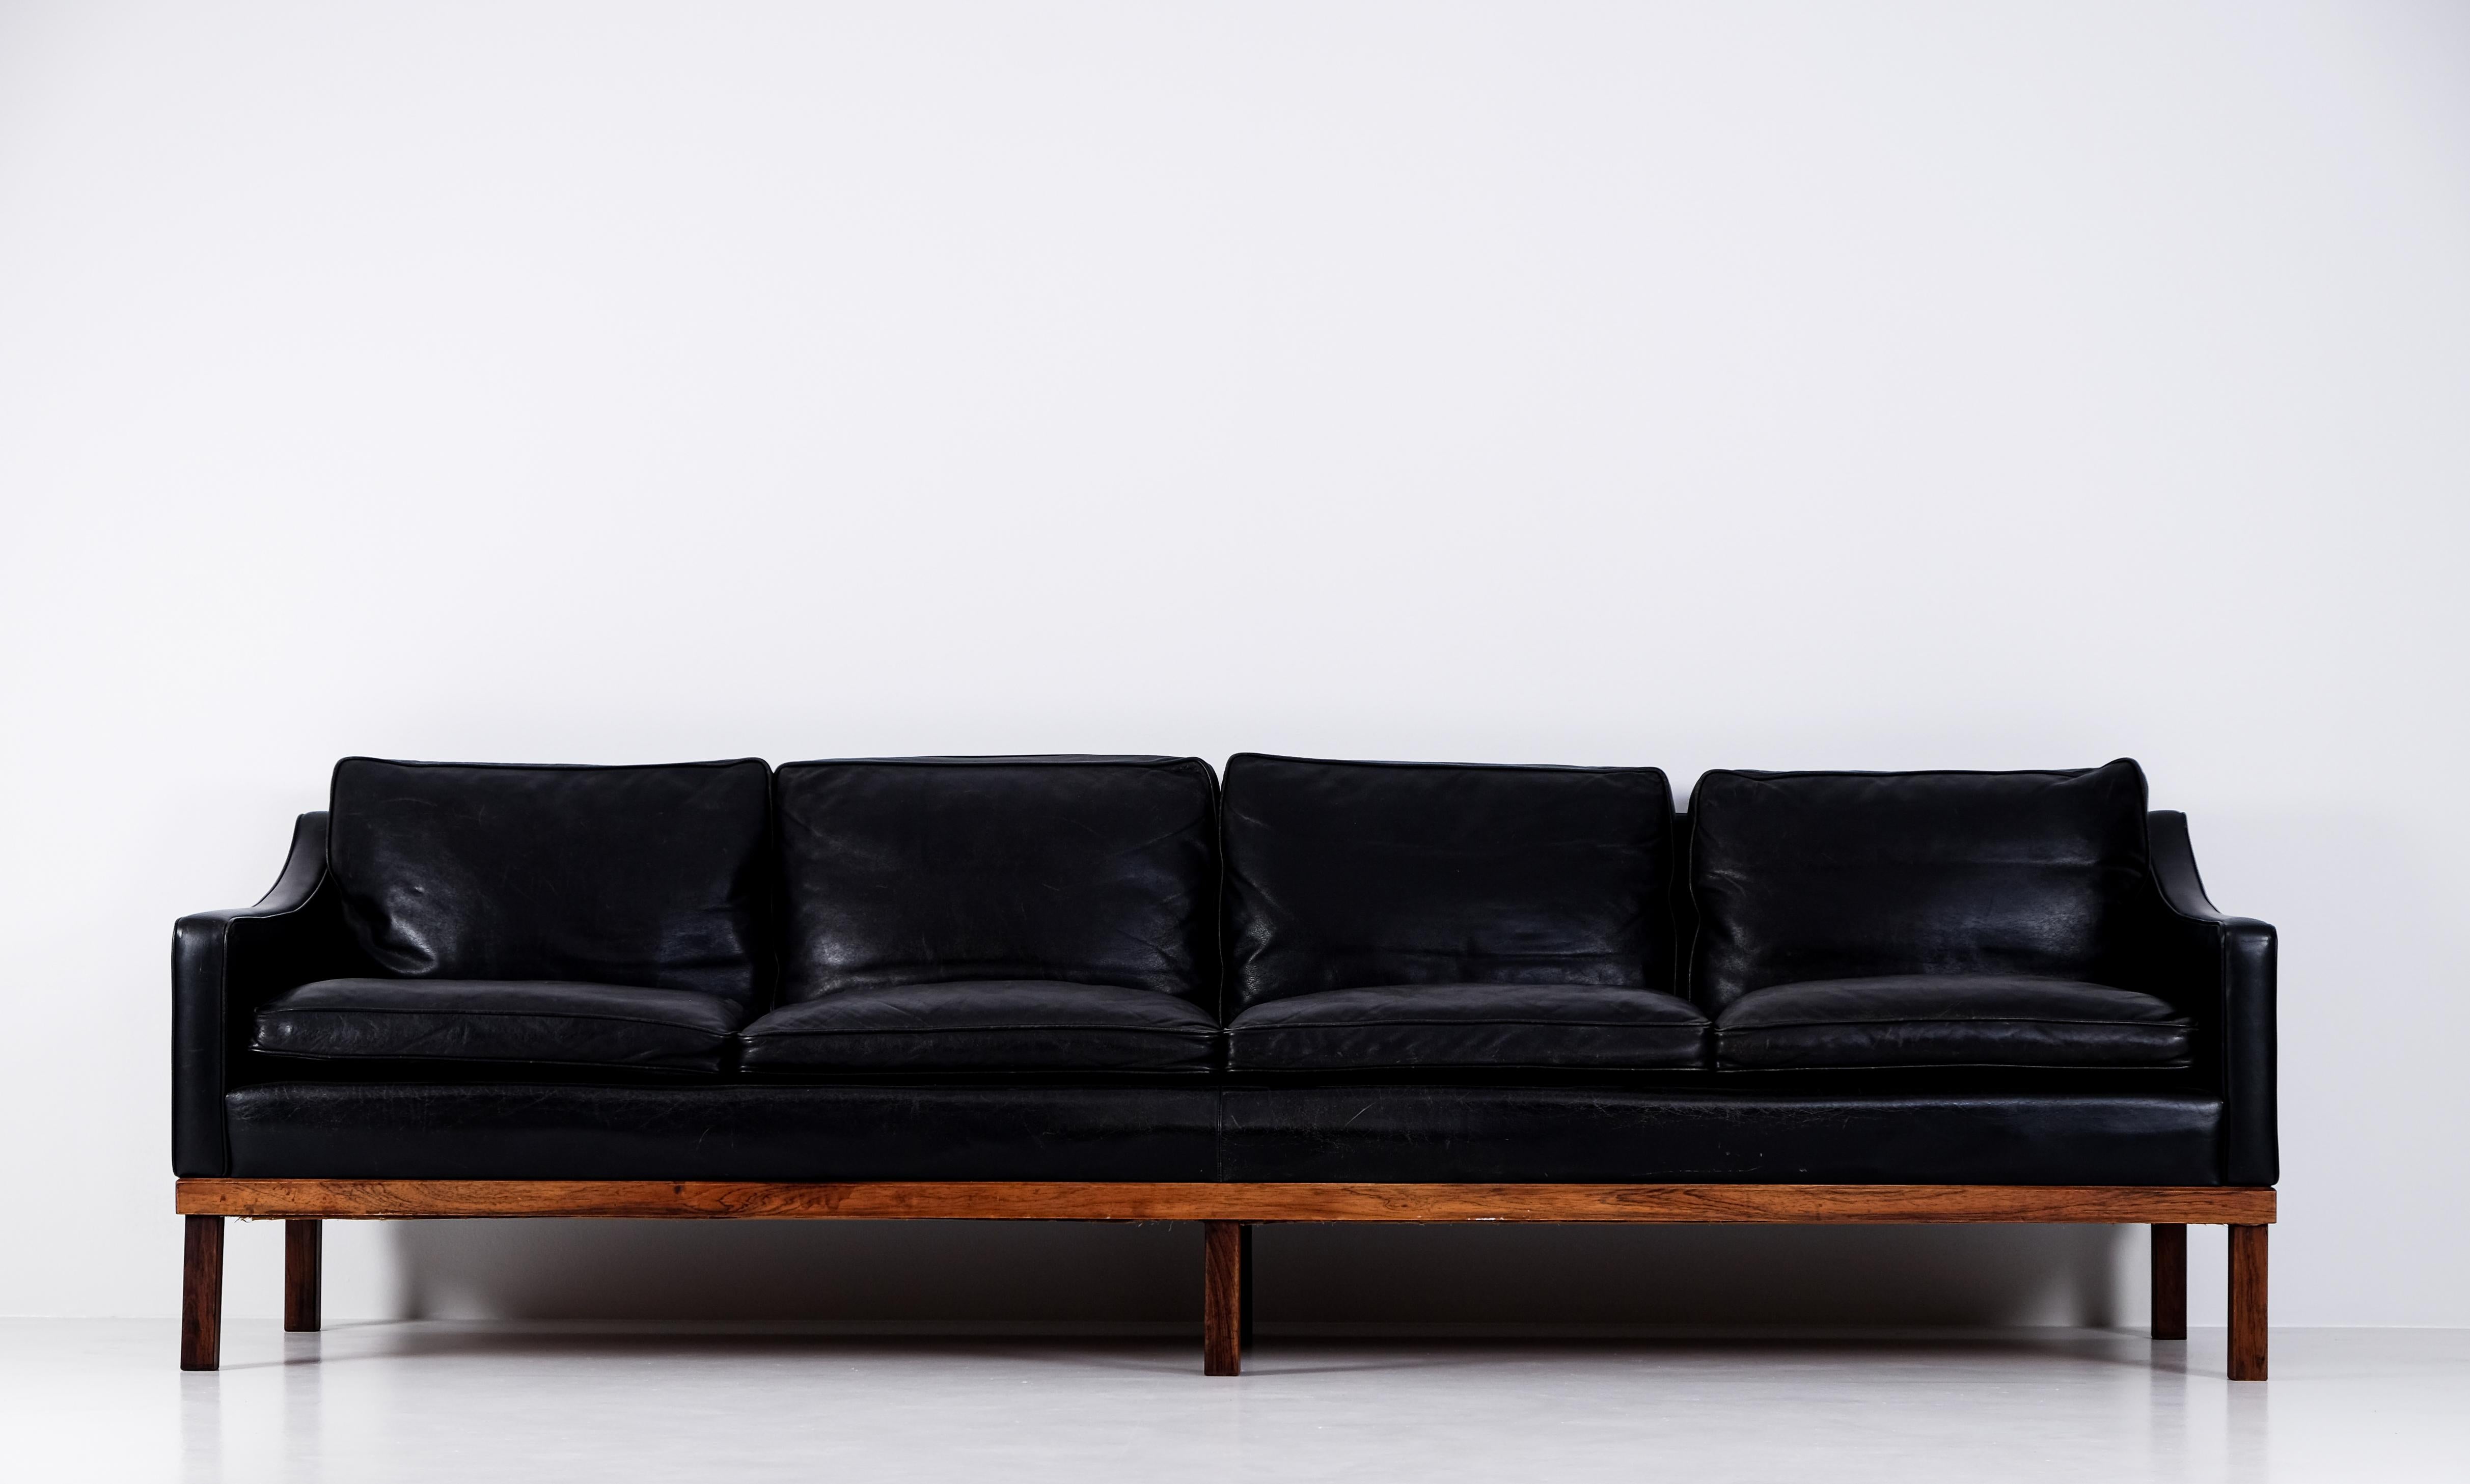 Seltenes Ib Kofod-Larsen-Sofa, 1960er Jahre (Leder) im Angebot